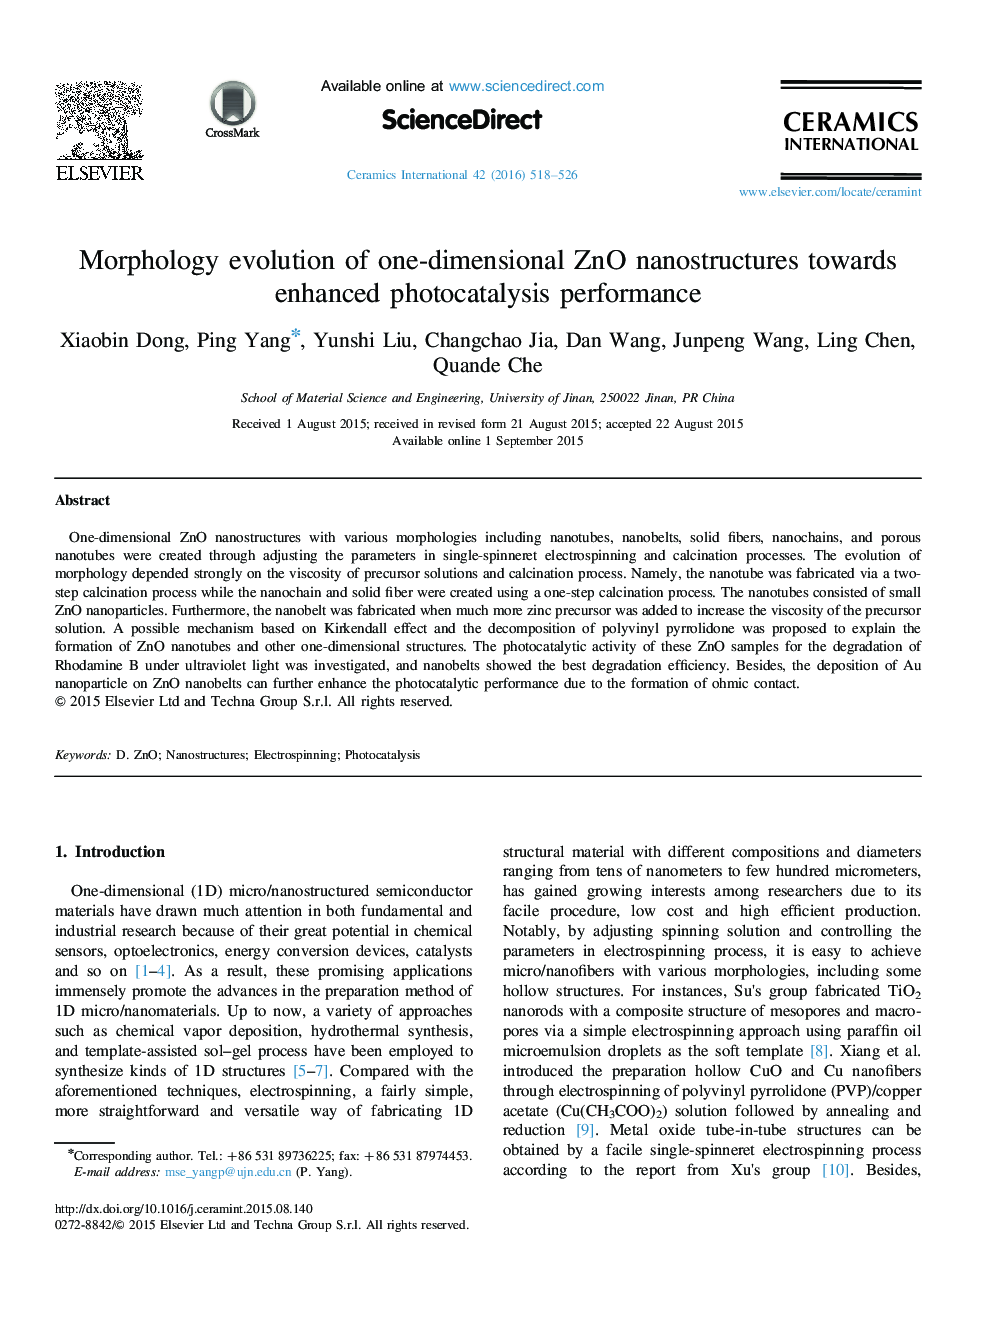 Morphology evolution of one-dimensional ZnO nanostructures towards enhanced photocatalysis performance